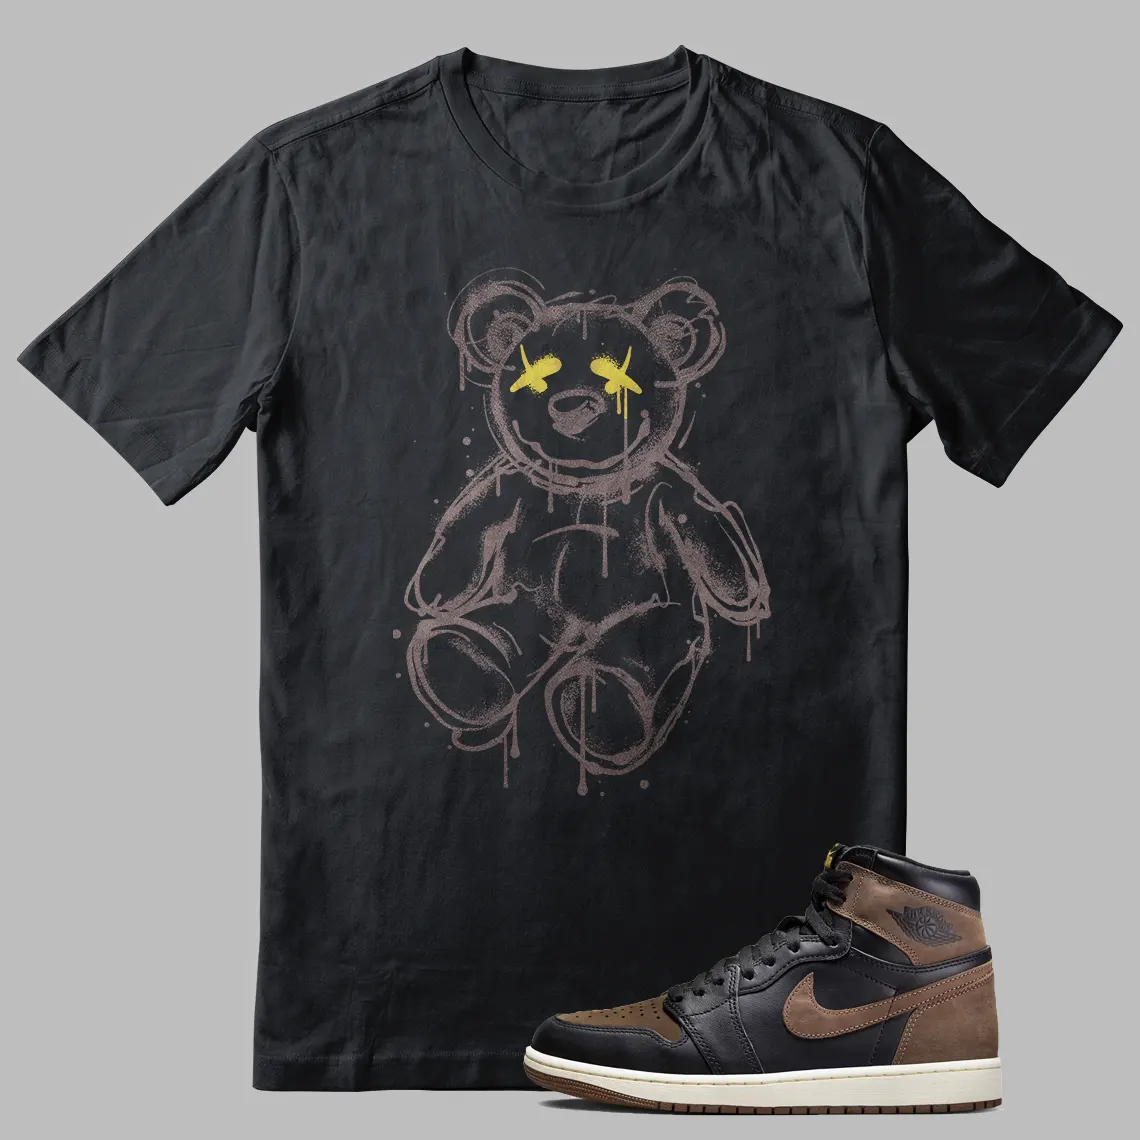 Jordan 1 Palomino Bear Shirt Dead Teddy Bear Graphic